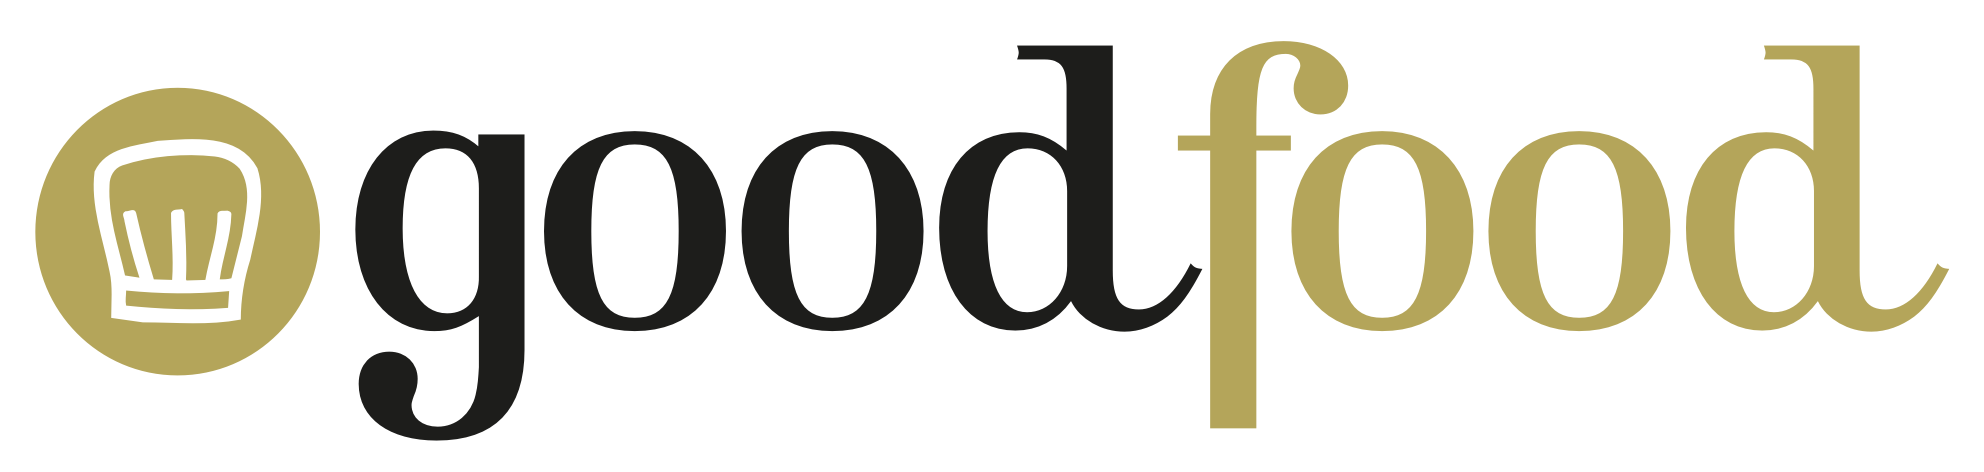 goodfood-logo.png